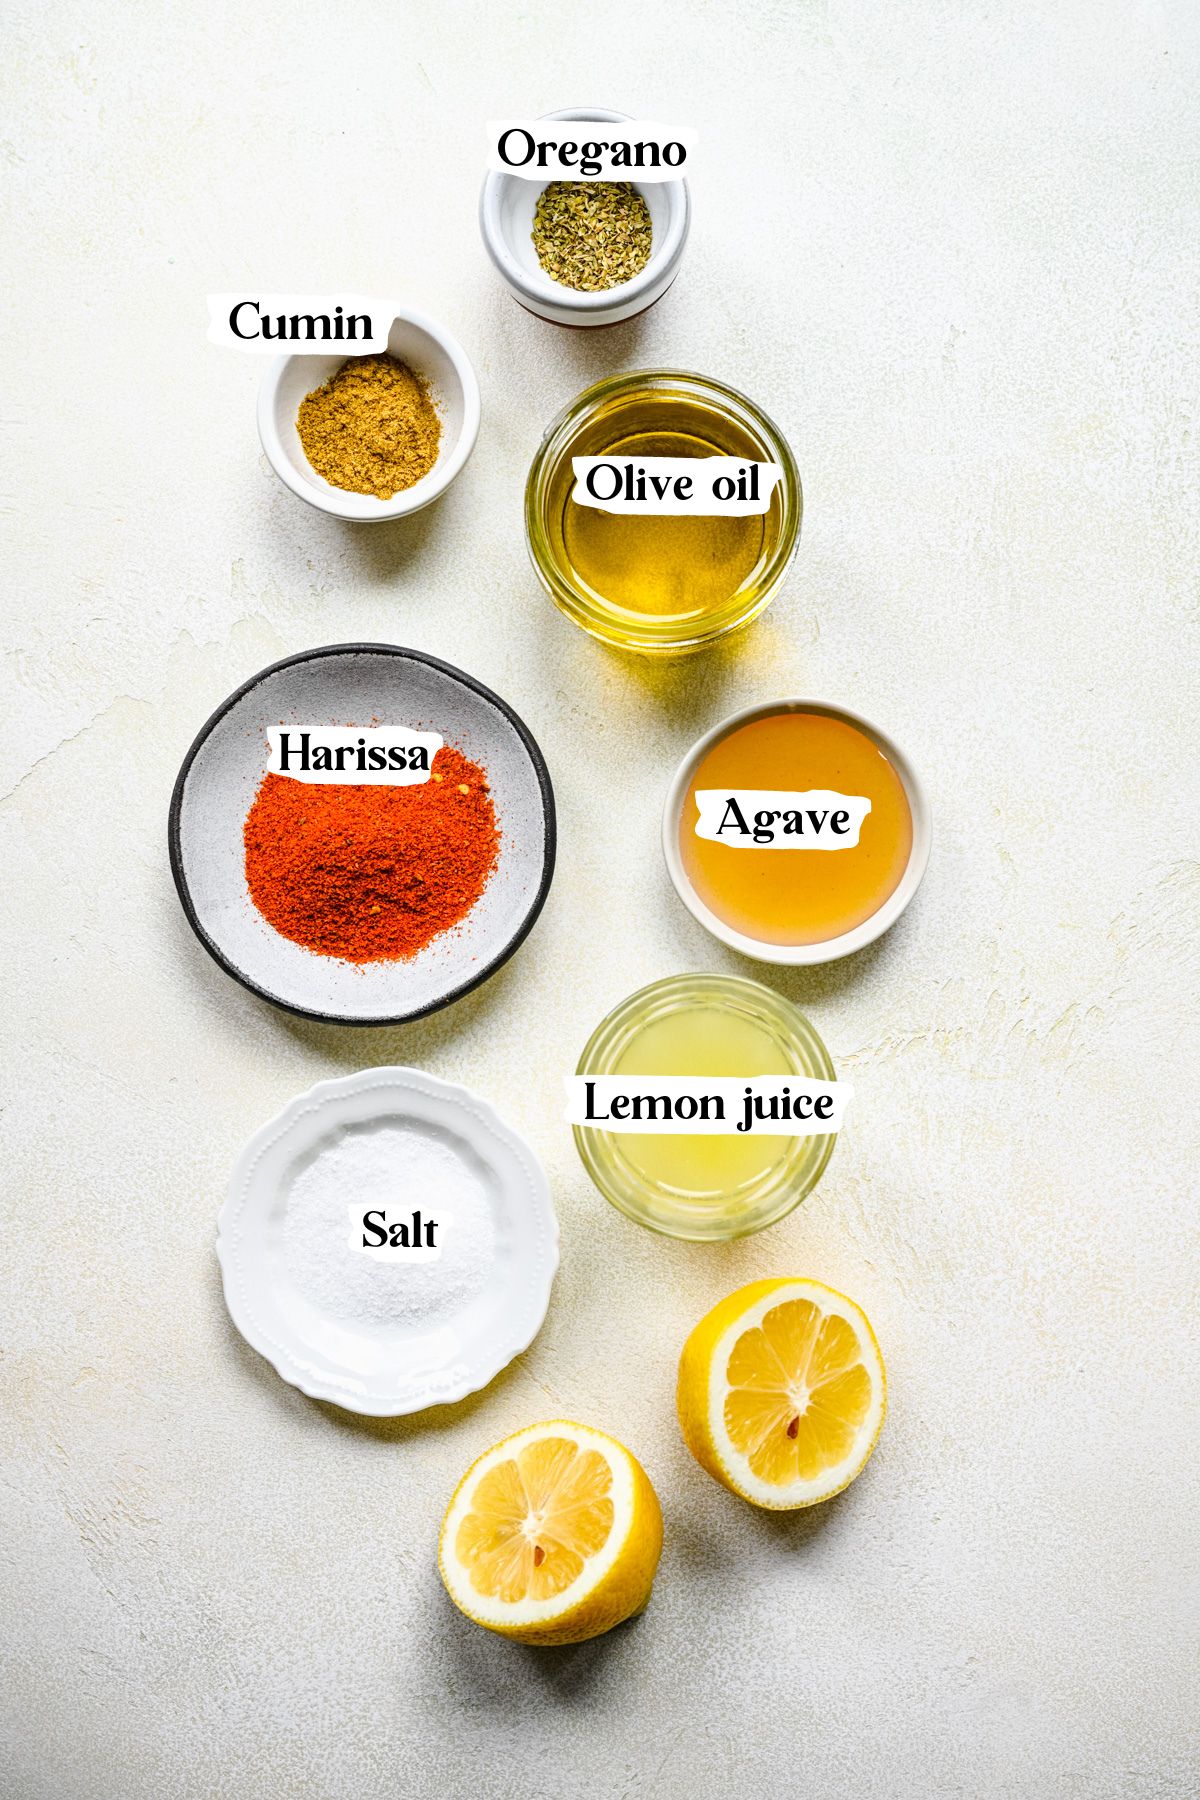 Harissa vinaigrette ingredients including agave and olive oil.